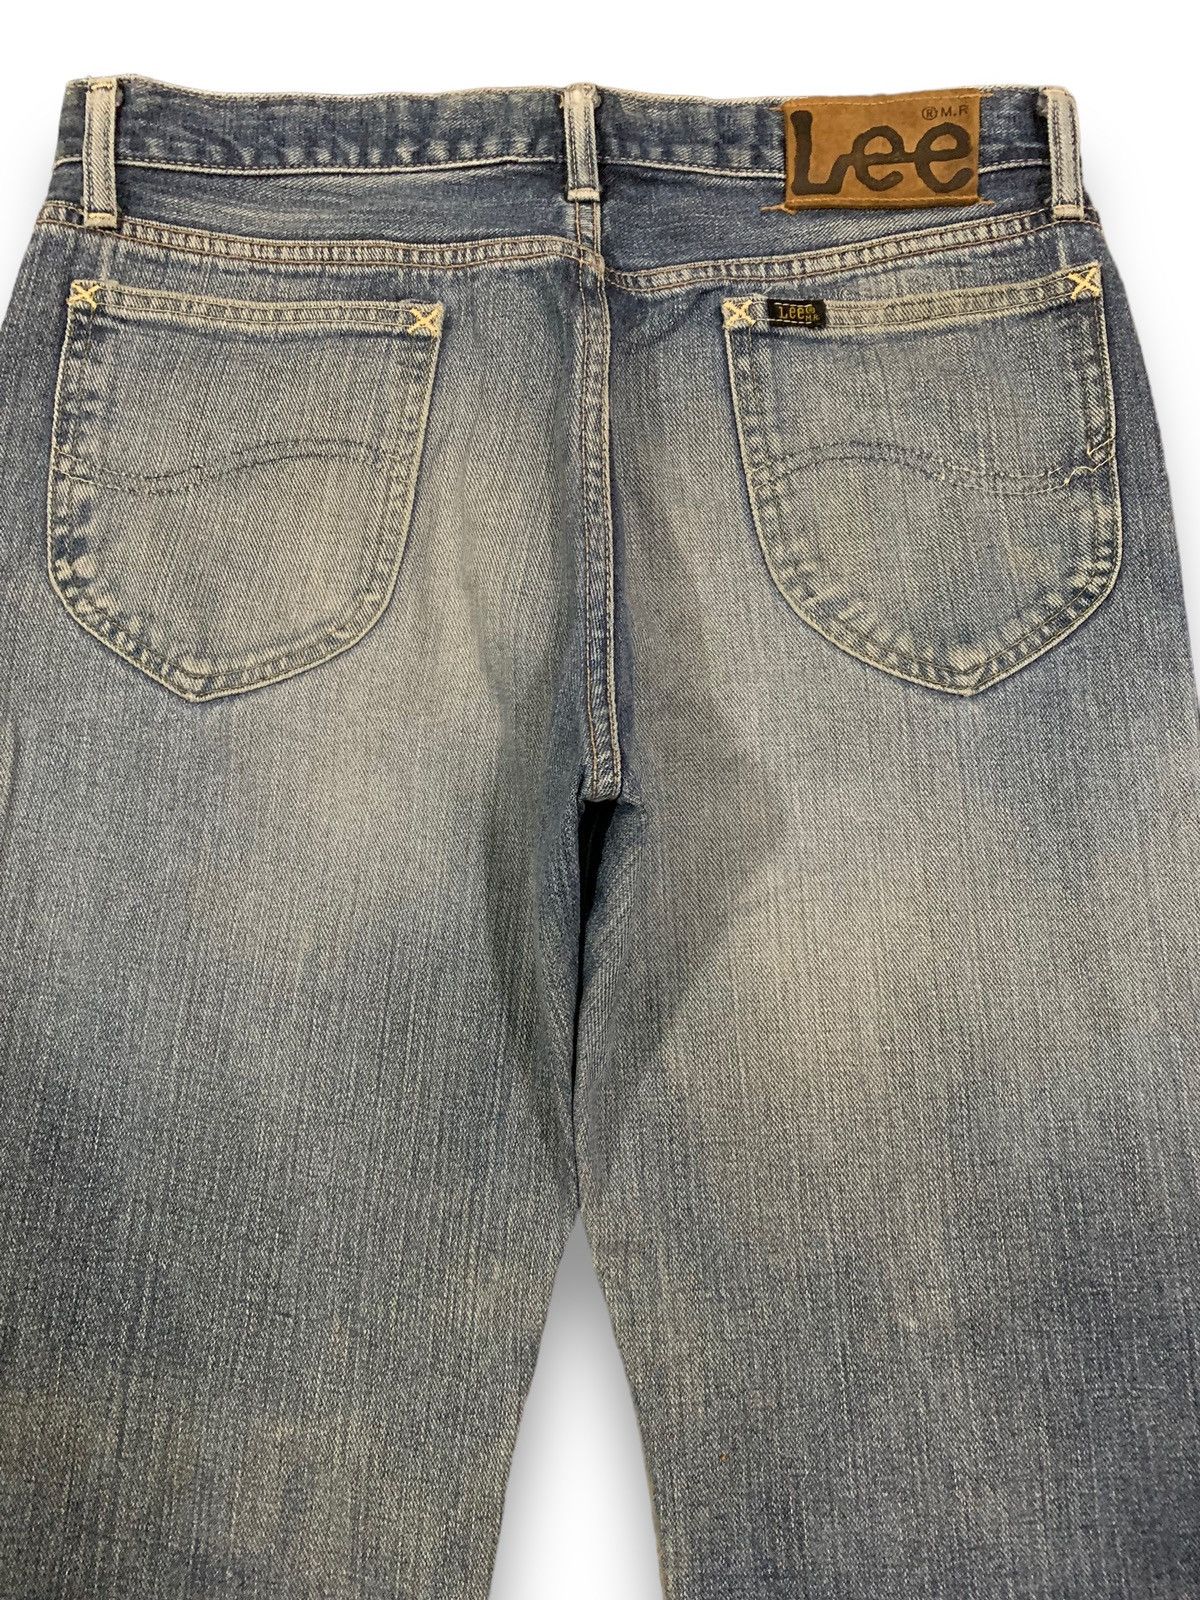 Lee Vintage Lee Cowboy Sanforized Distressed Flared Jeans Size US 31 - 13 Thumbnail